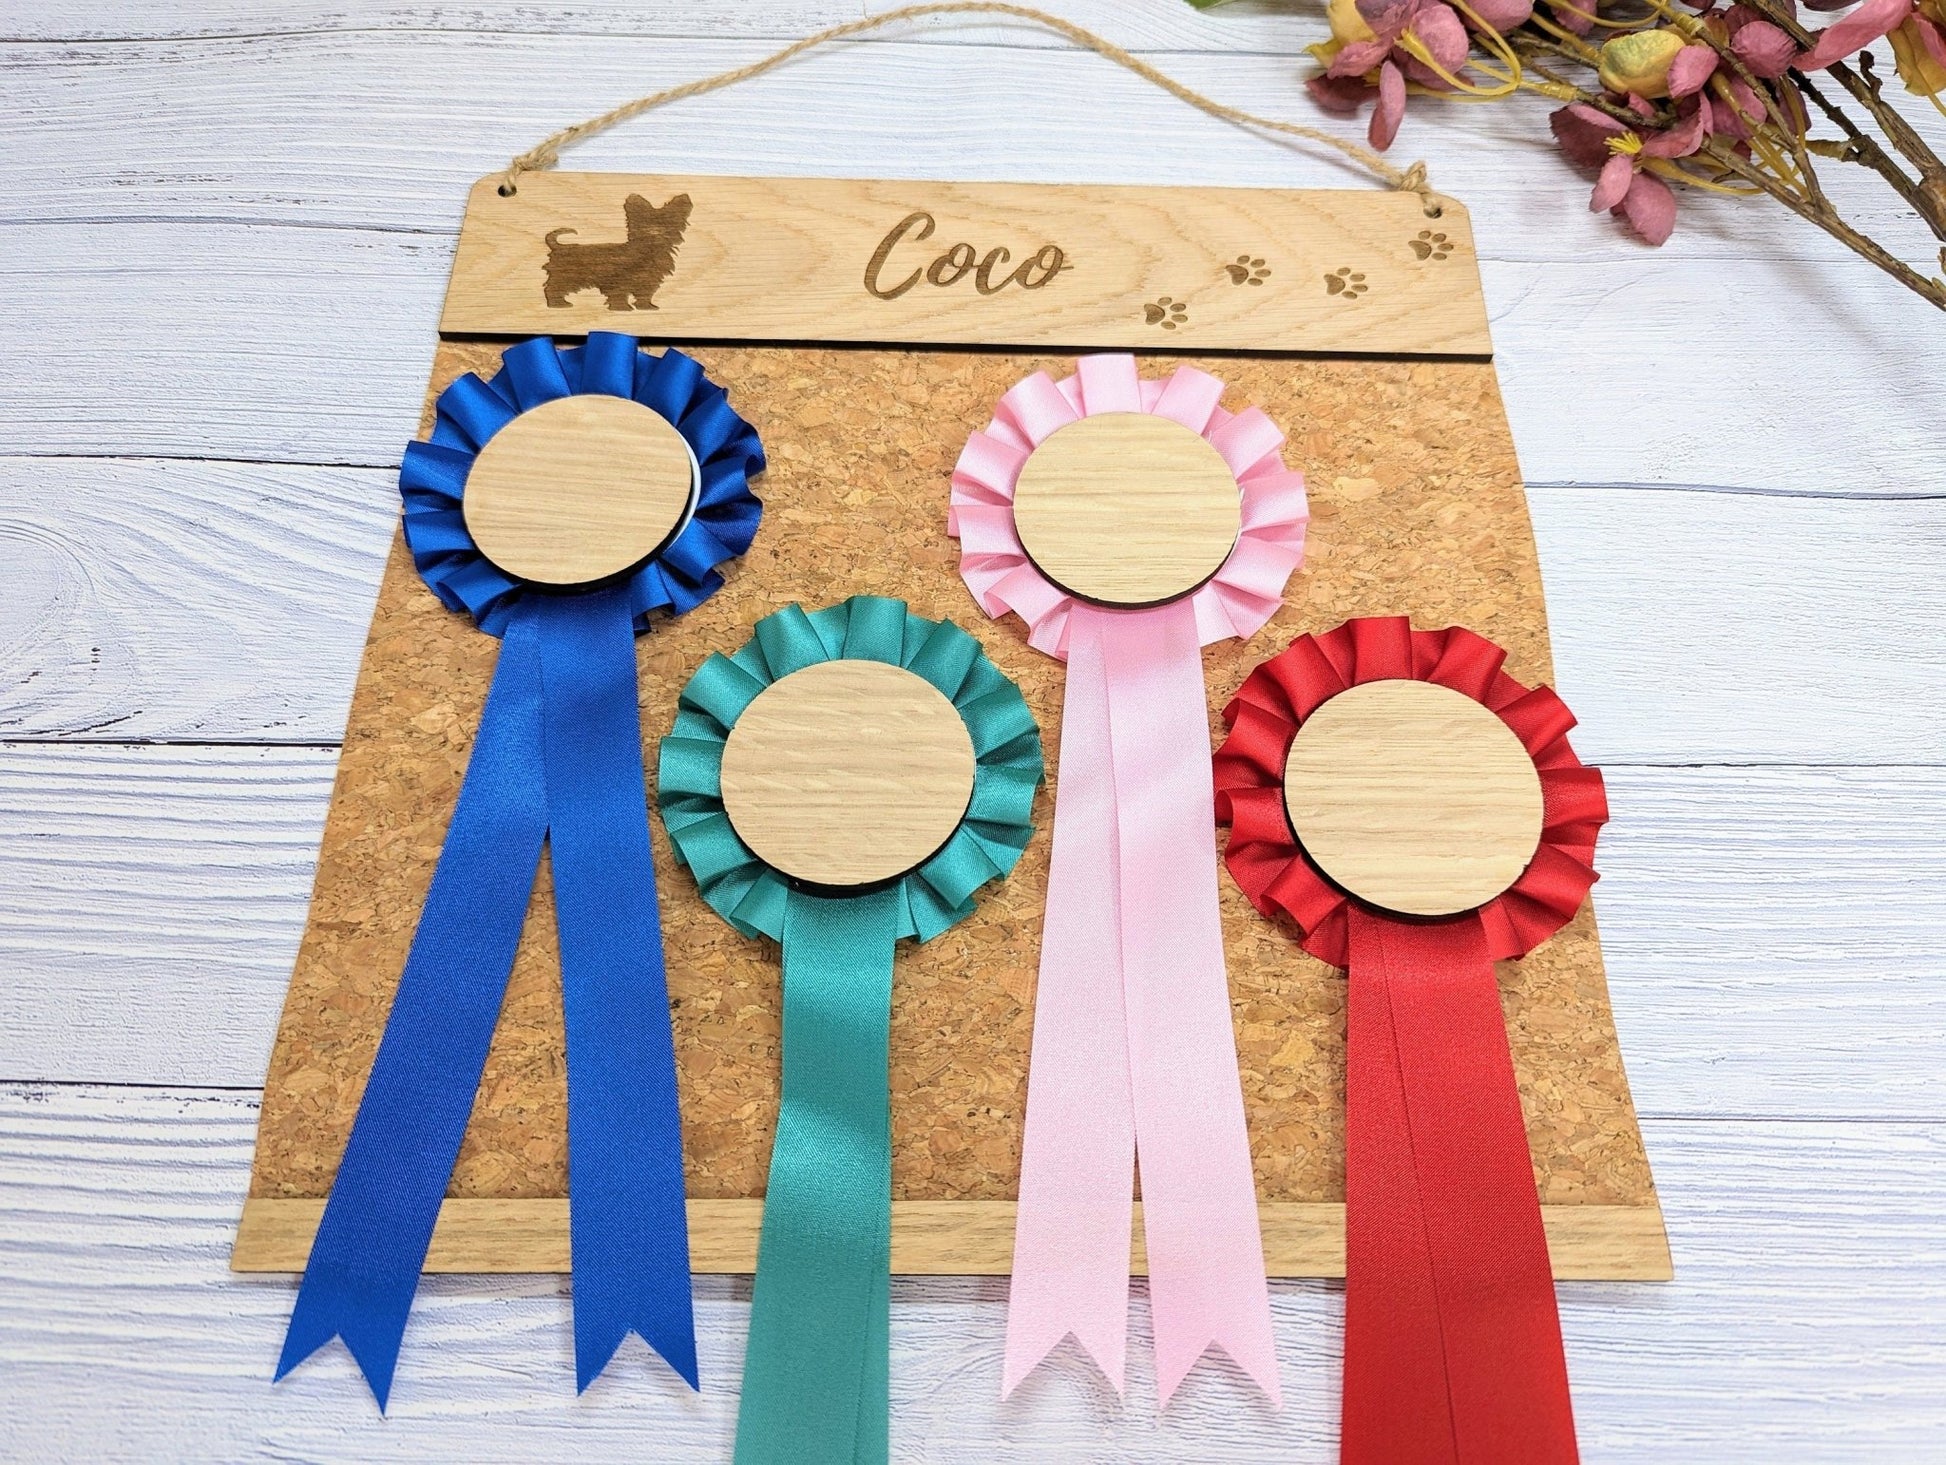 Personalised Yorkshire Terrier Rosette Holder - Custom Dog Show Award Display - Handcrafted Wooden Keepsake for Pet Lovers - CherryGroveCraft